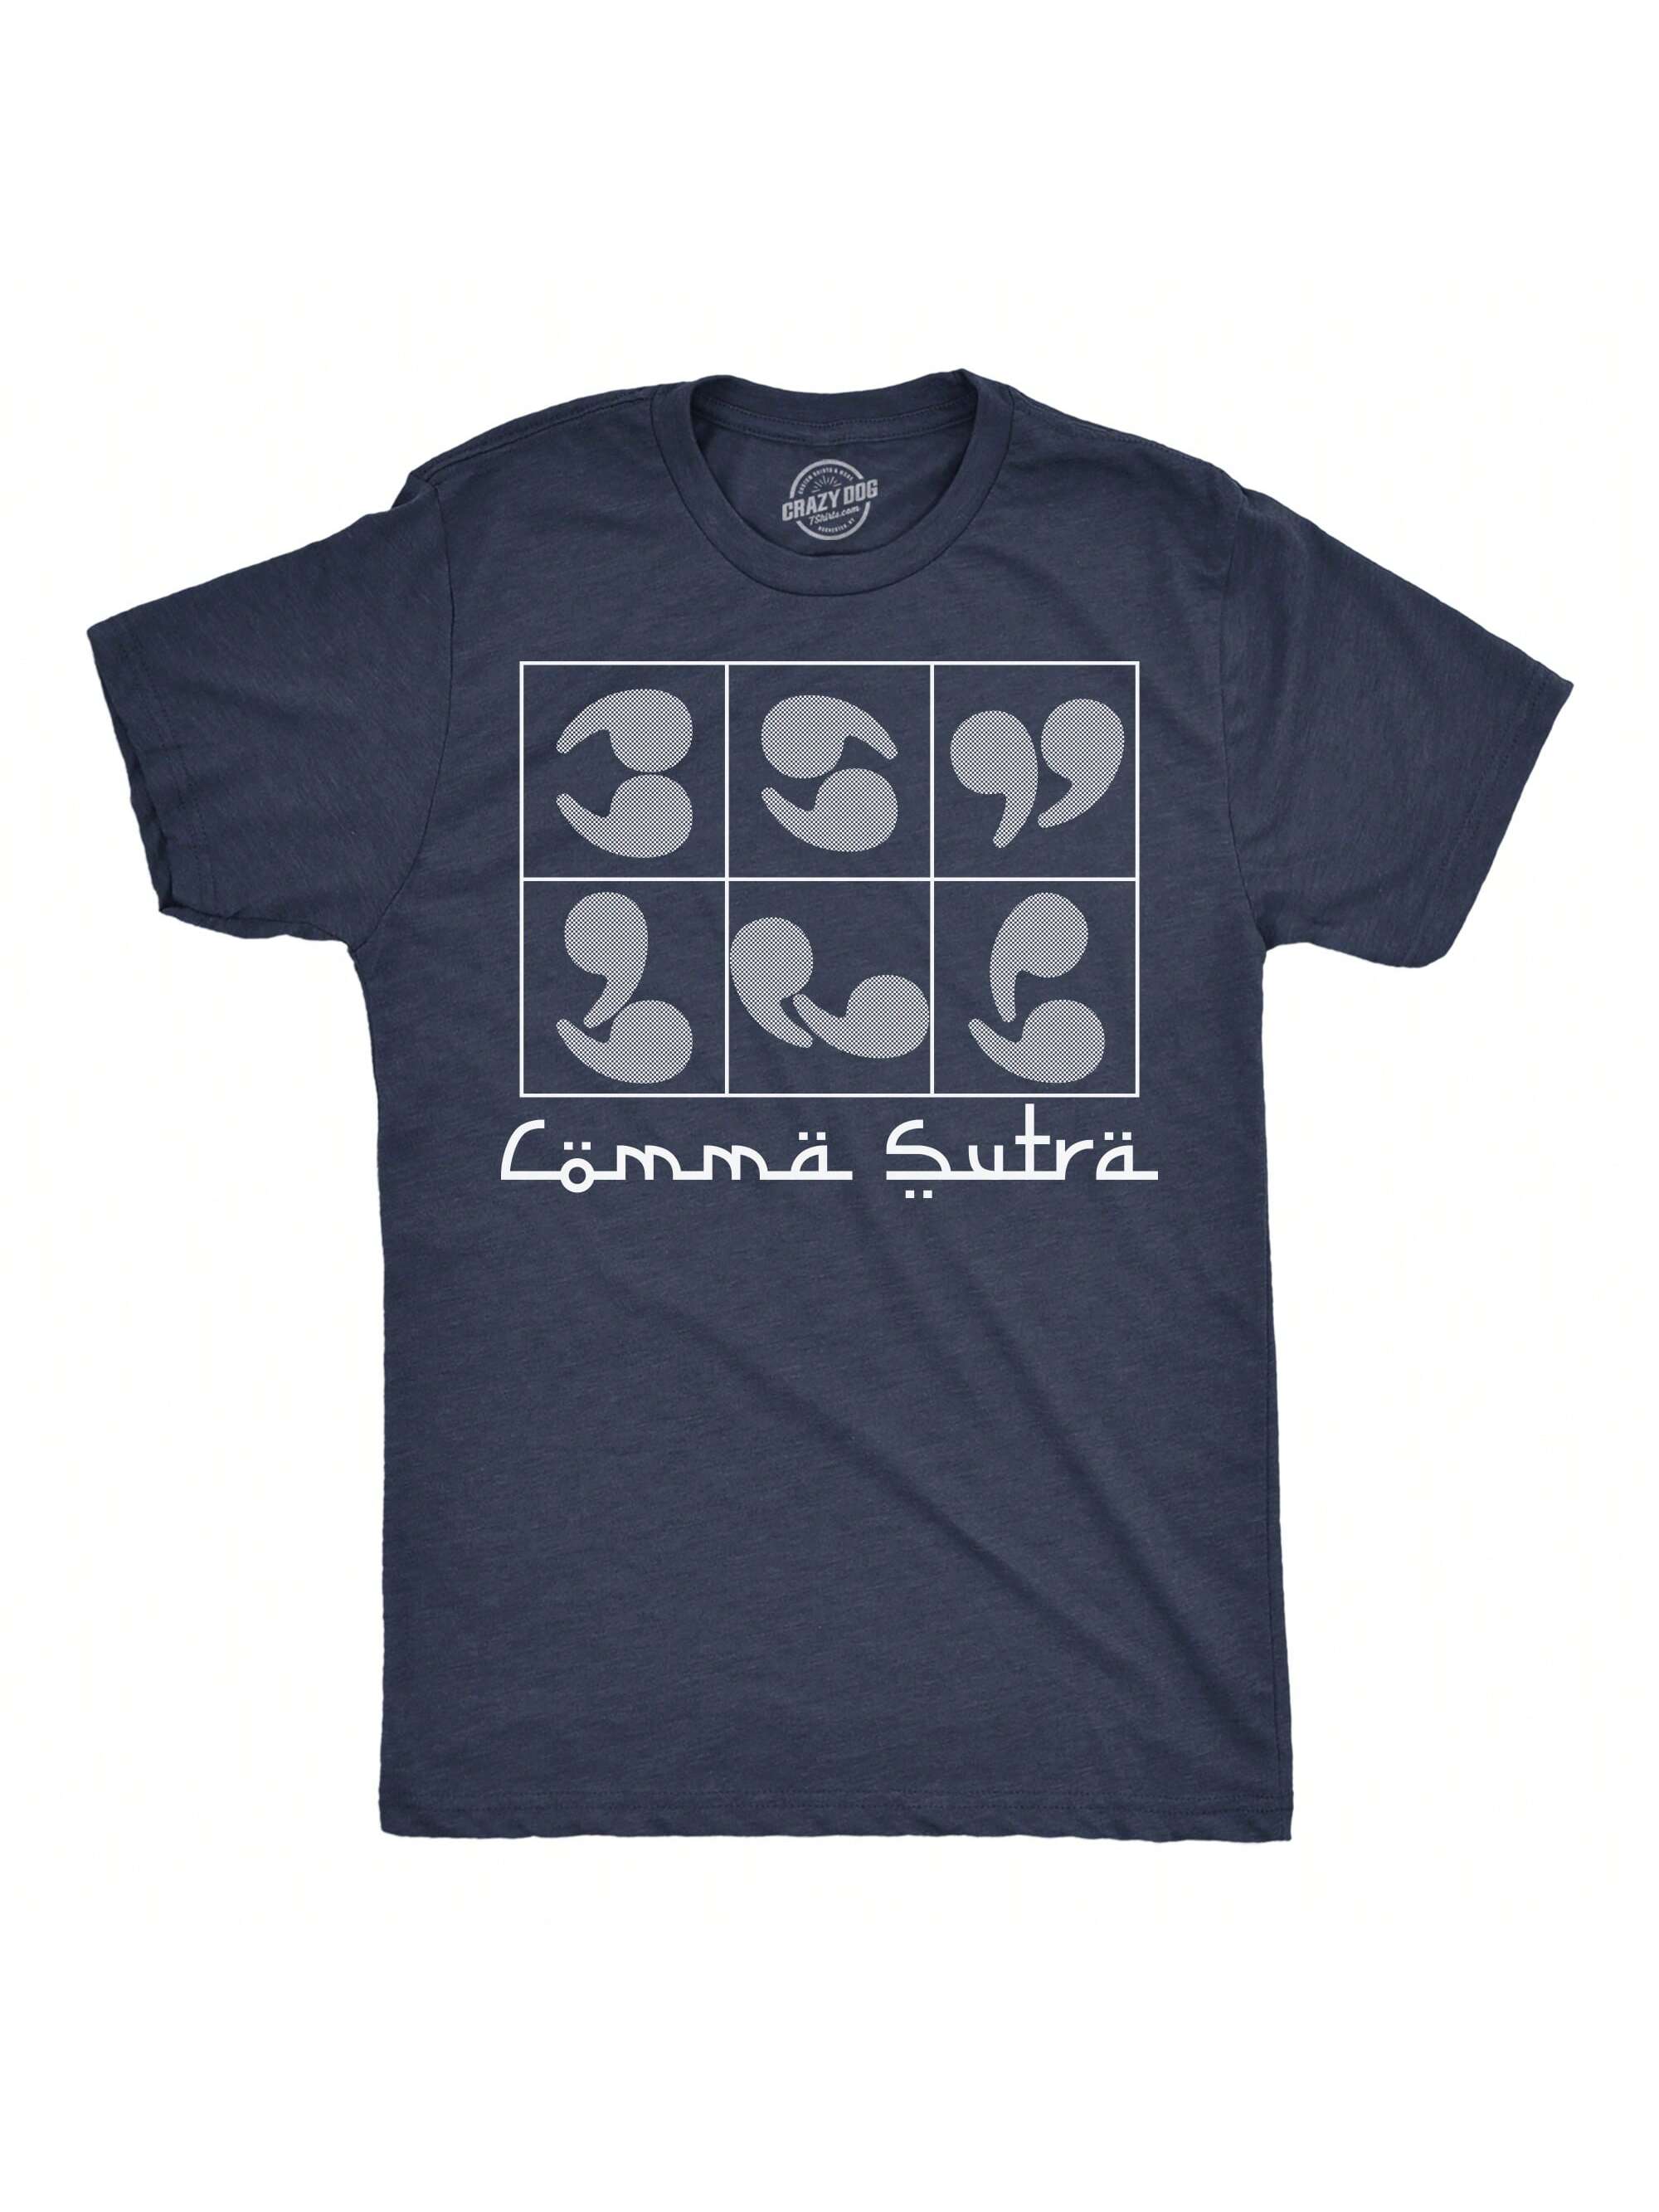 999 sterling silver sutra mantra opening heart sutra lotus buddhist ring Мужские забавные футболки Comma Sutra саркастическая футболка с рисунком для мужчин (темно-синий Хизер - Comma Sutra) - L, хизер вмс - запятая сутра